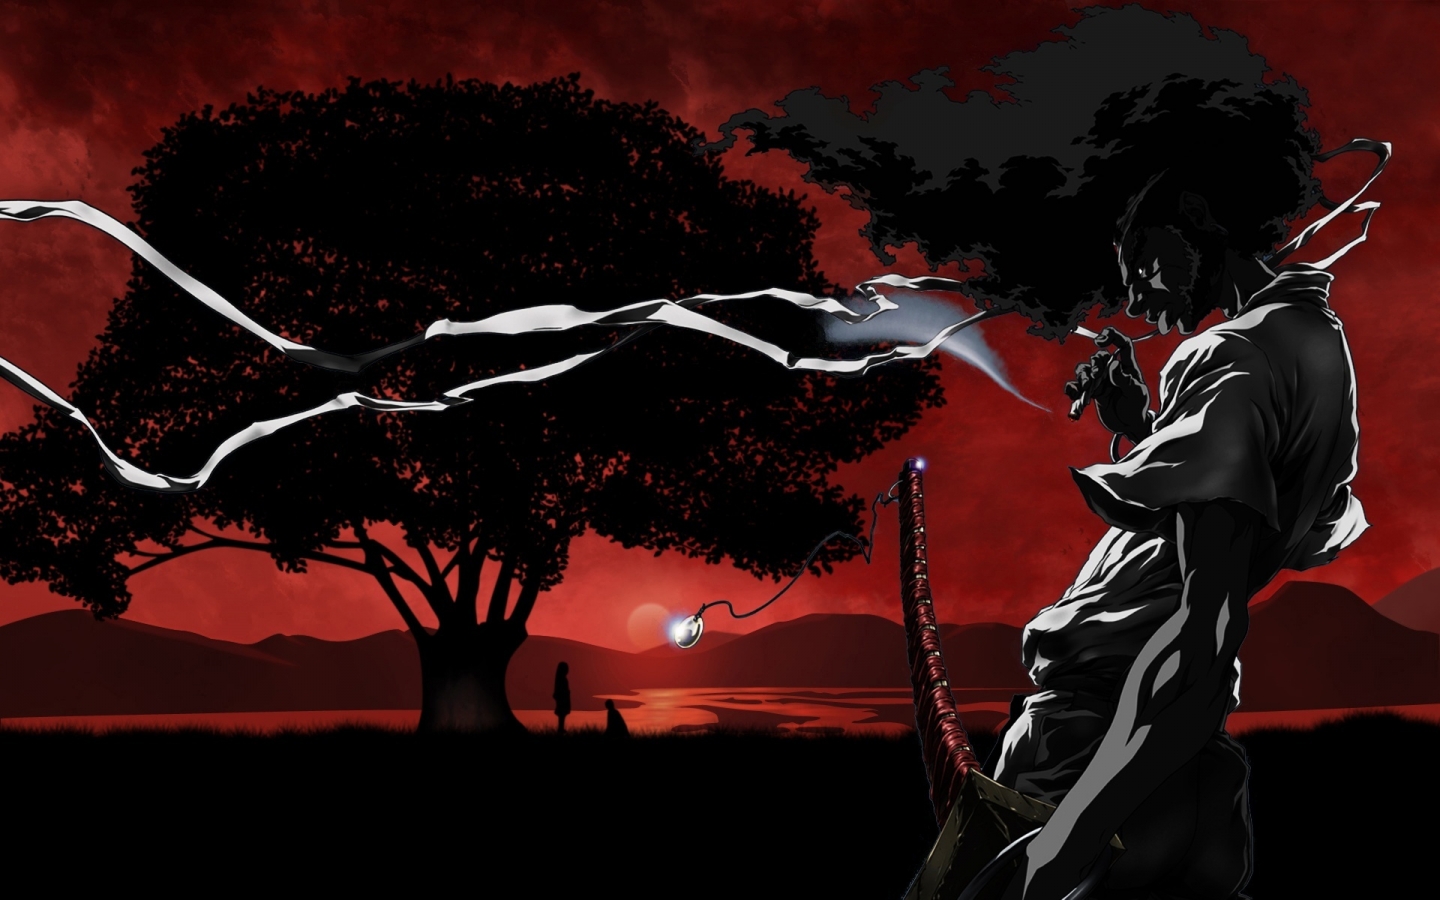 Sundown Afro Samurai for 1440 x 900 widescreen resolution